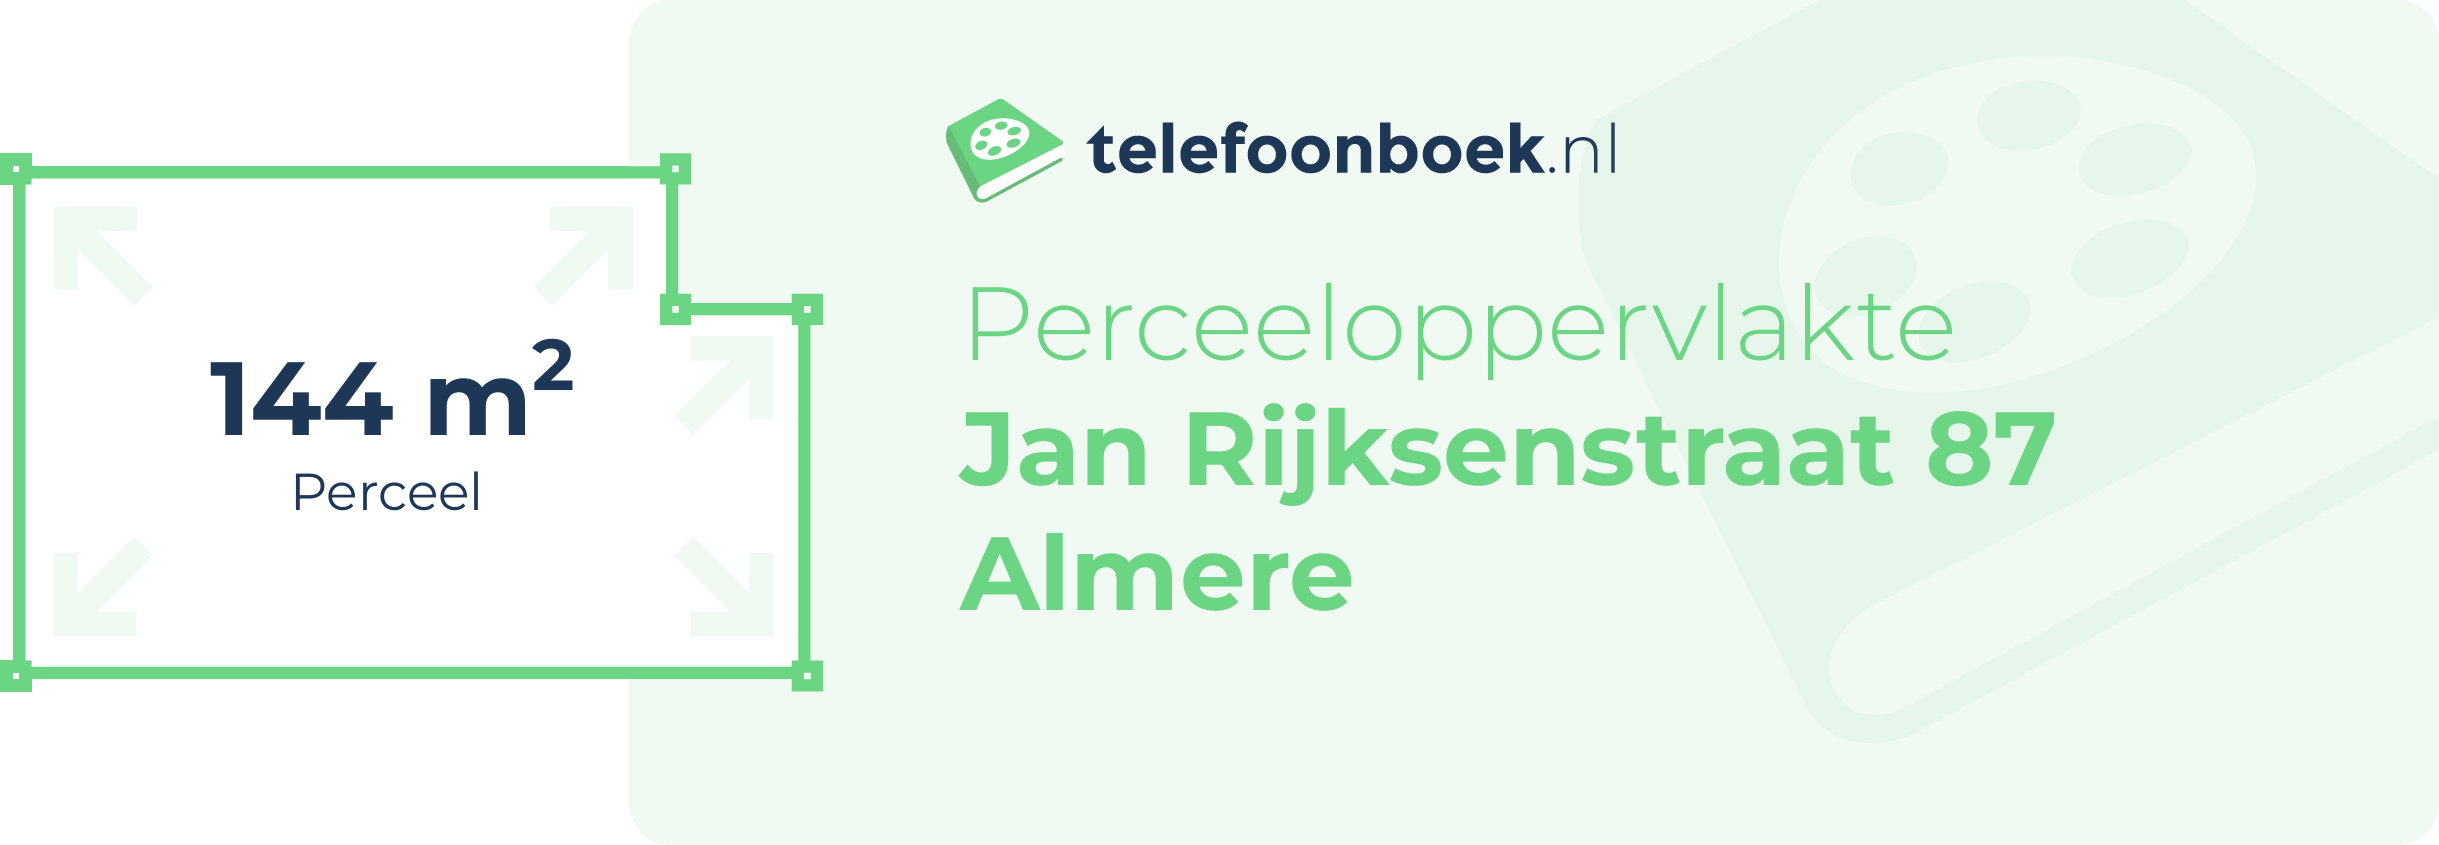 Perceeloppervlakte Jan Rijksenstraat 87 Almere